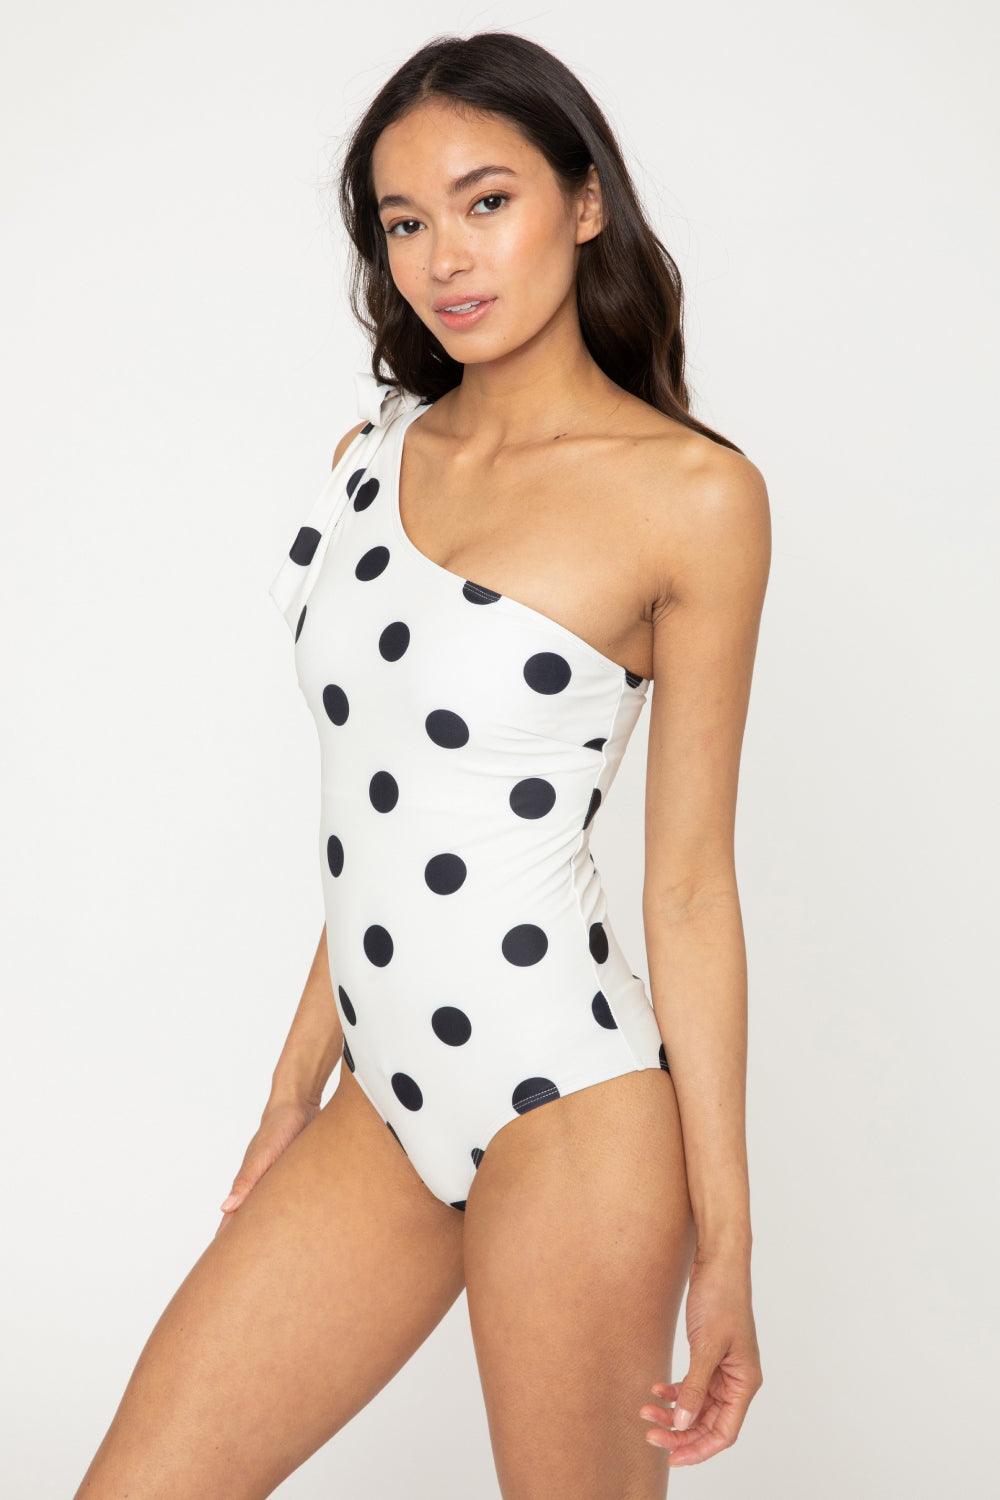 Marina West Swim Deep End One-Shoulder One-Piece Swimsuit - Crazy Like a Daisy Boutique